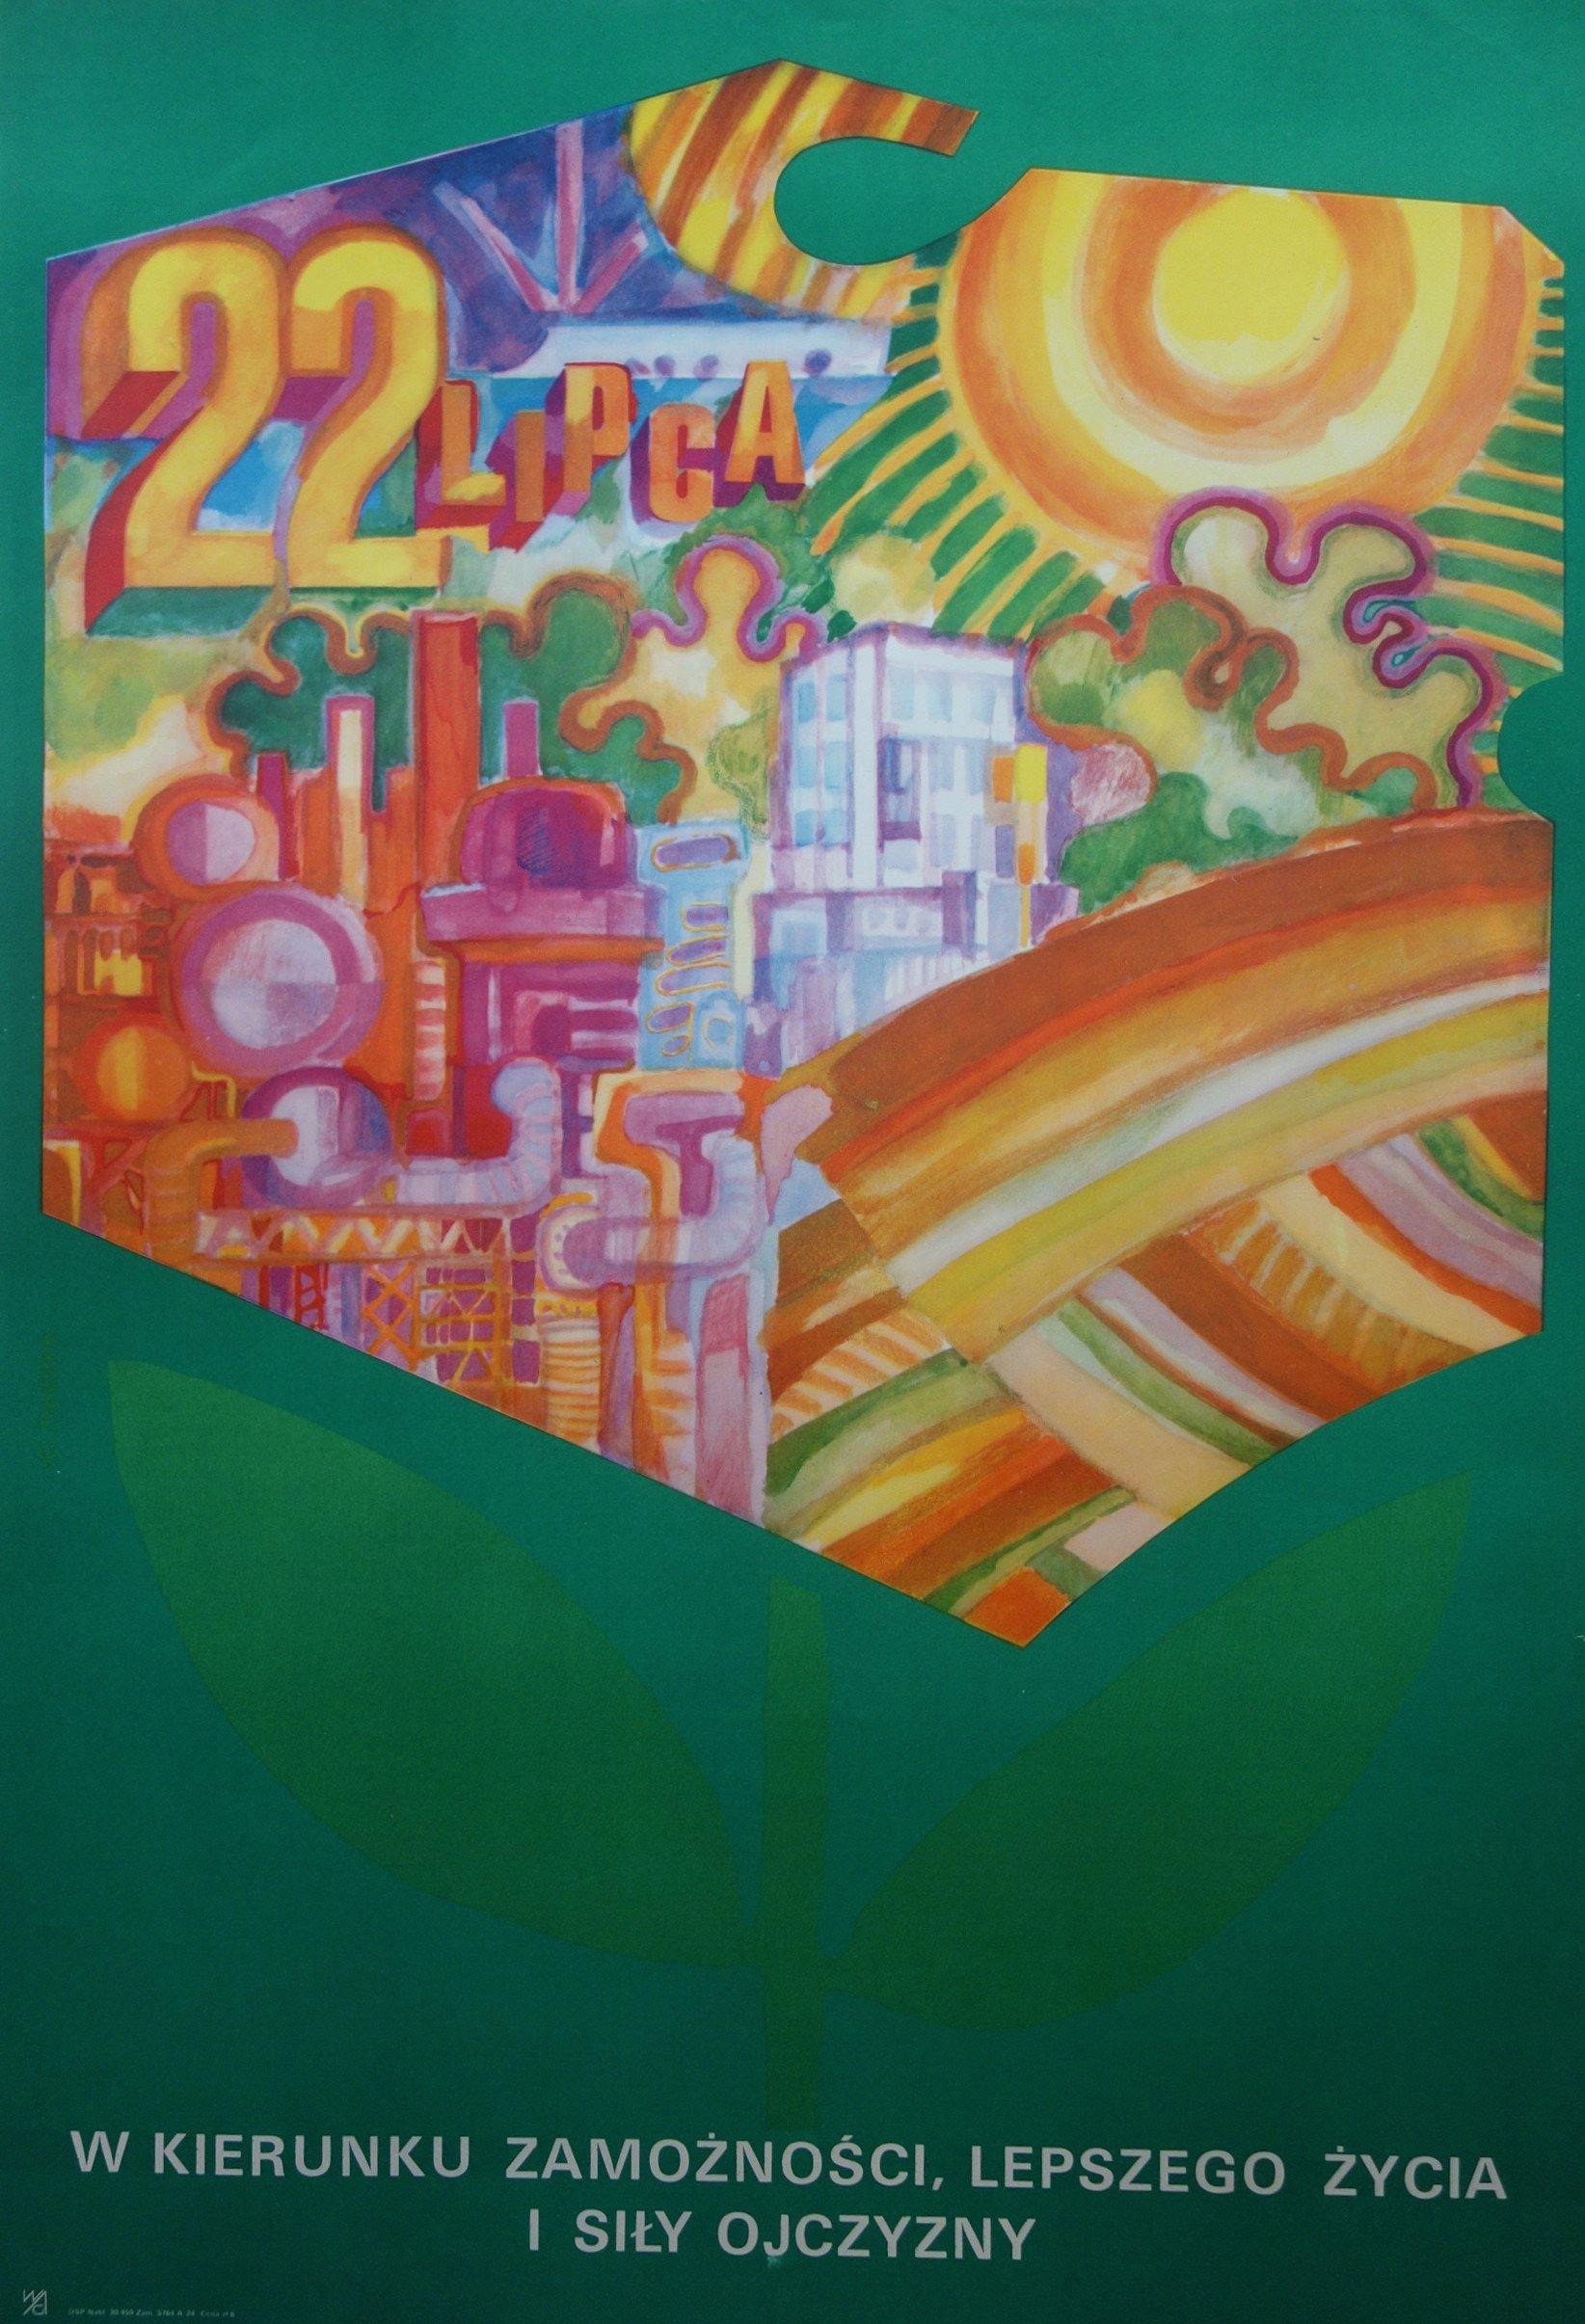 22 Lipca (City) - Poster Museum